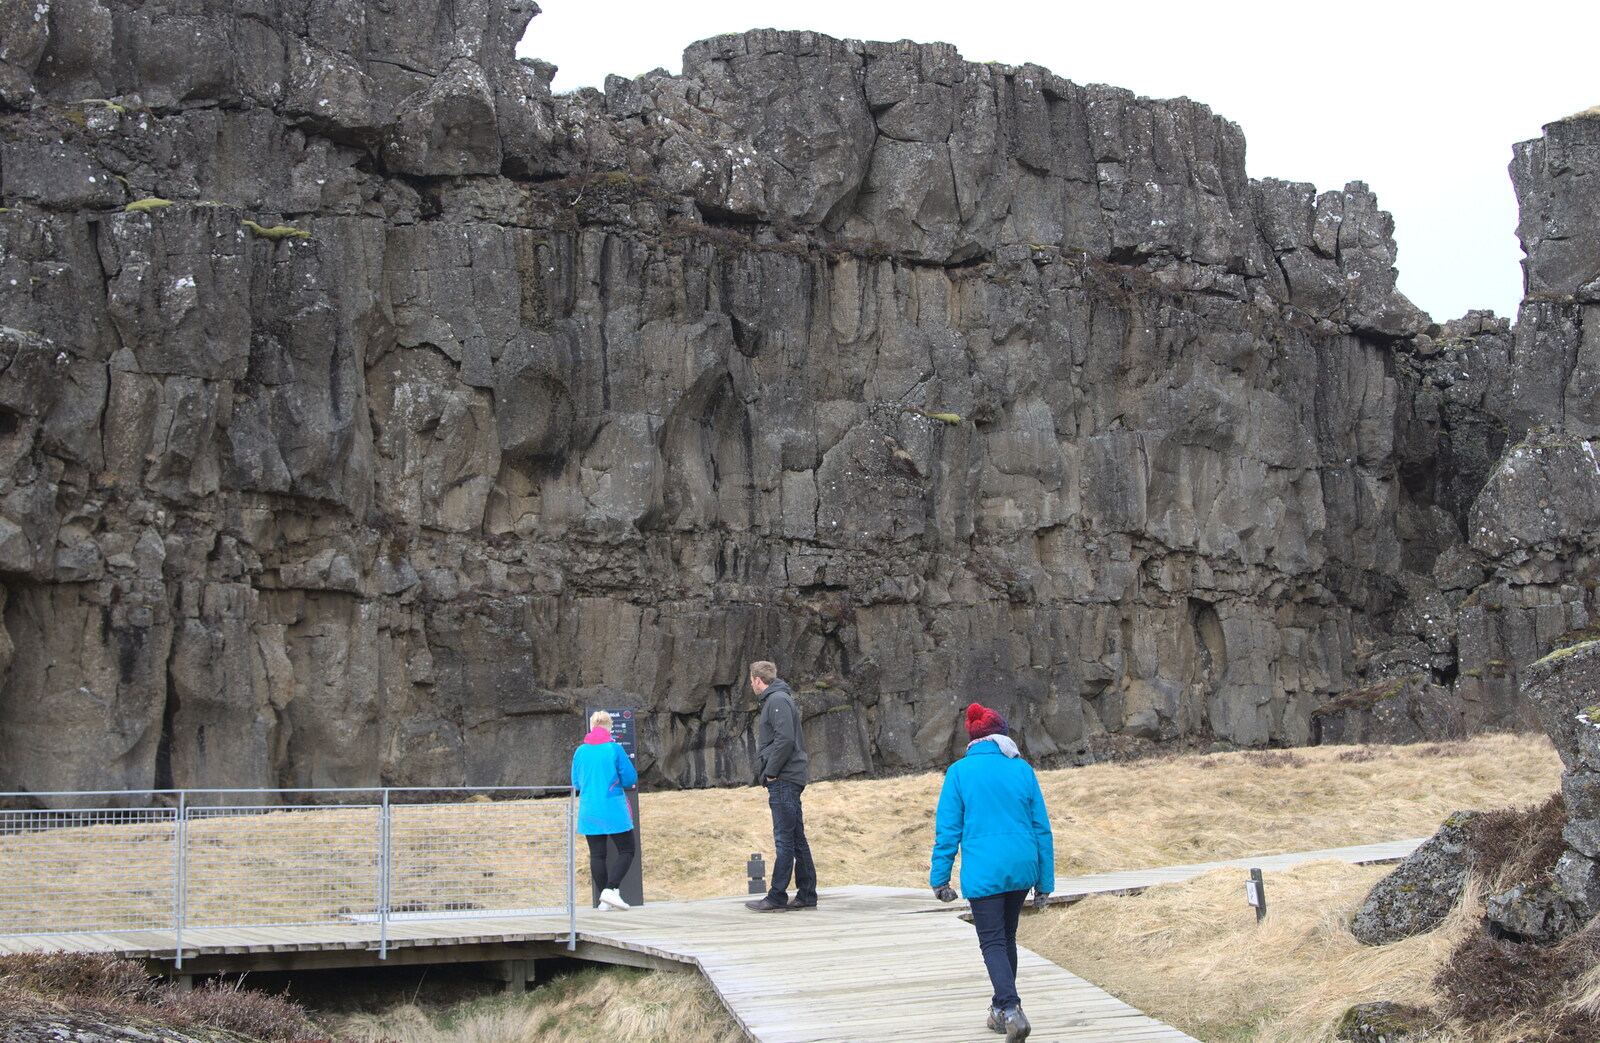 We head into Þingvellir from The Golden Circle of Ísland, Iceland - 22nd April 2017